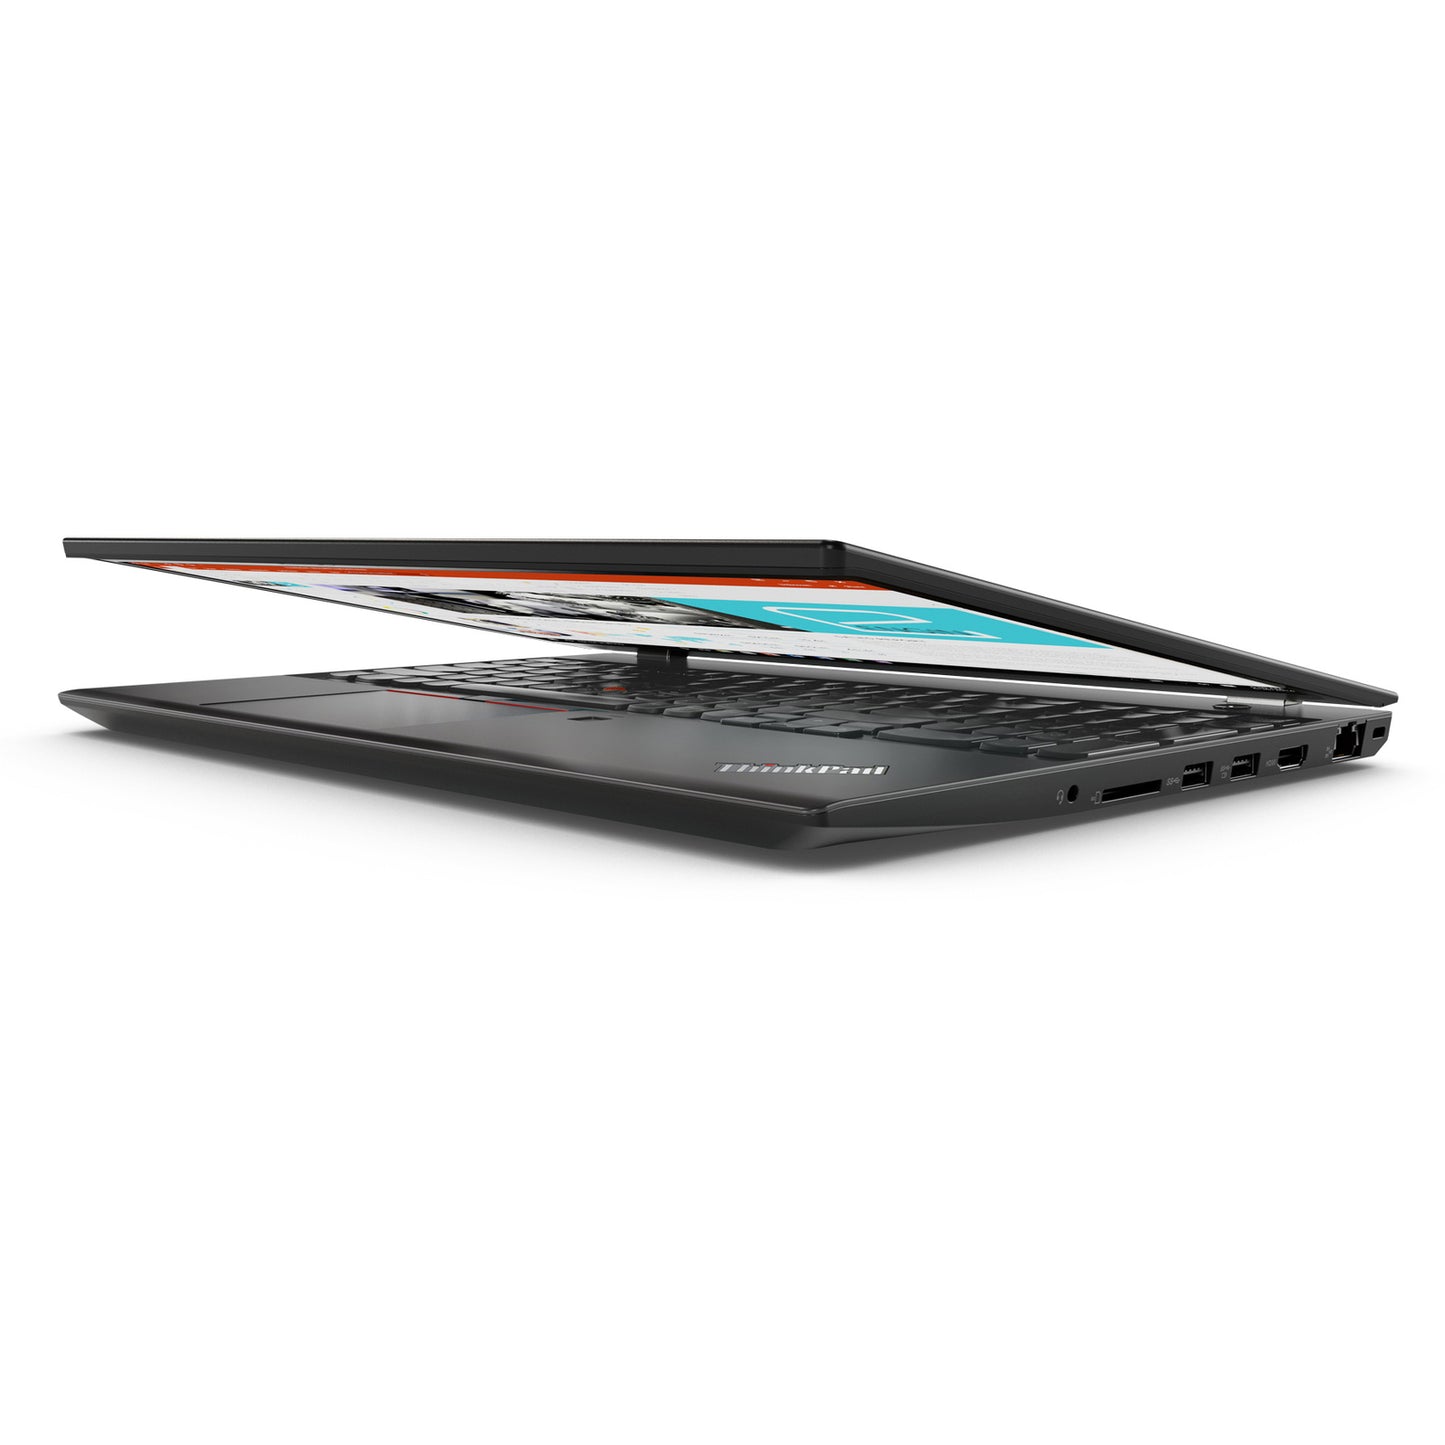 Lenovo ThinkPad T580 Core i5-8350u 15.6" Laptop Offers (Open Box)